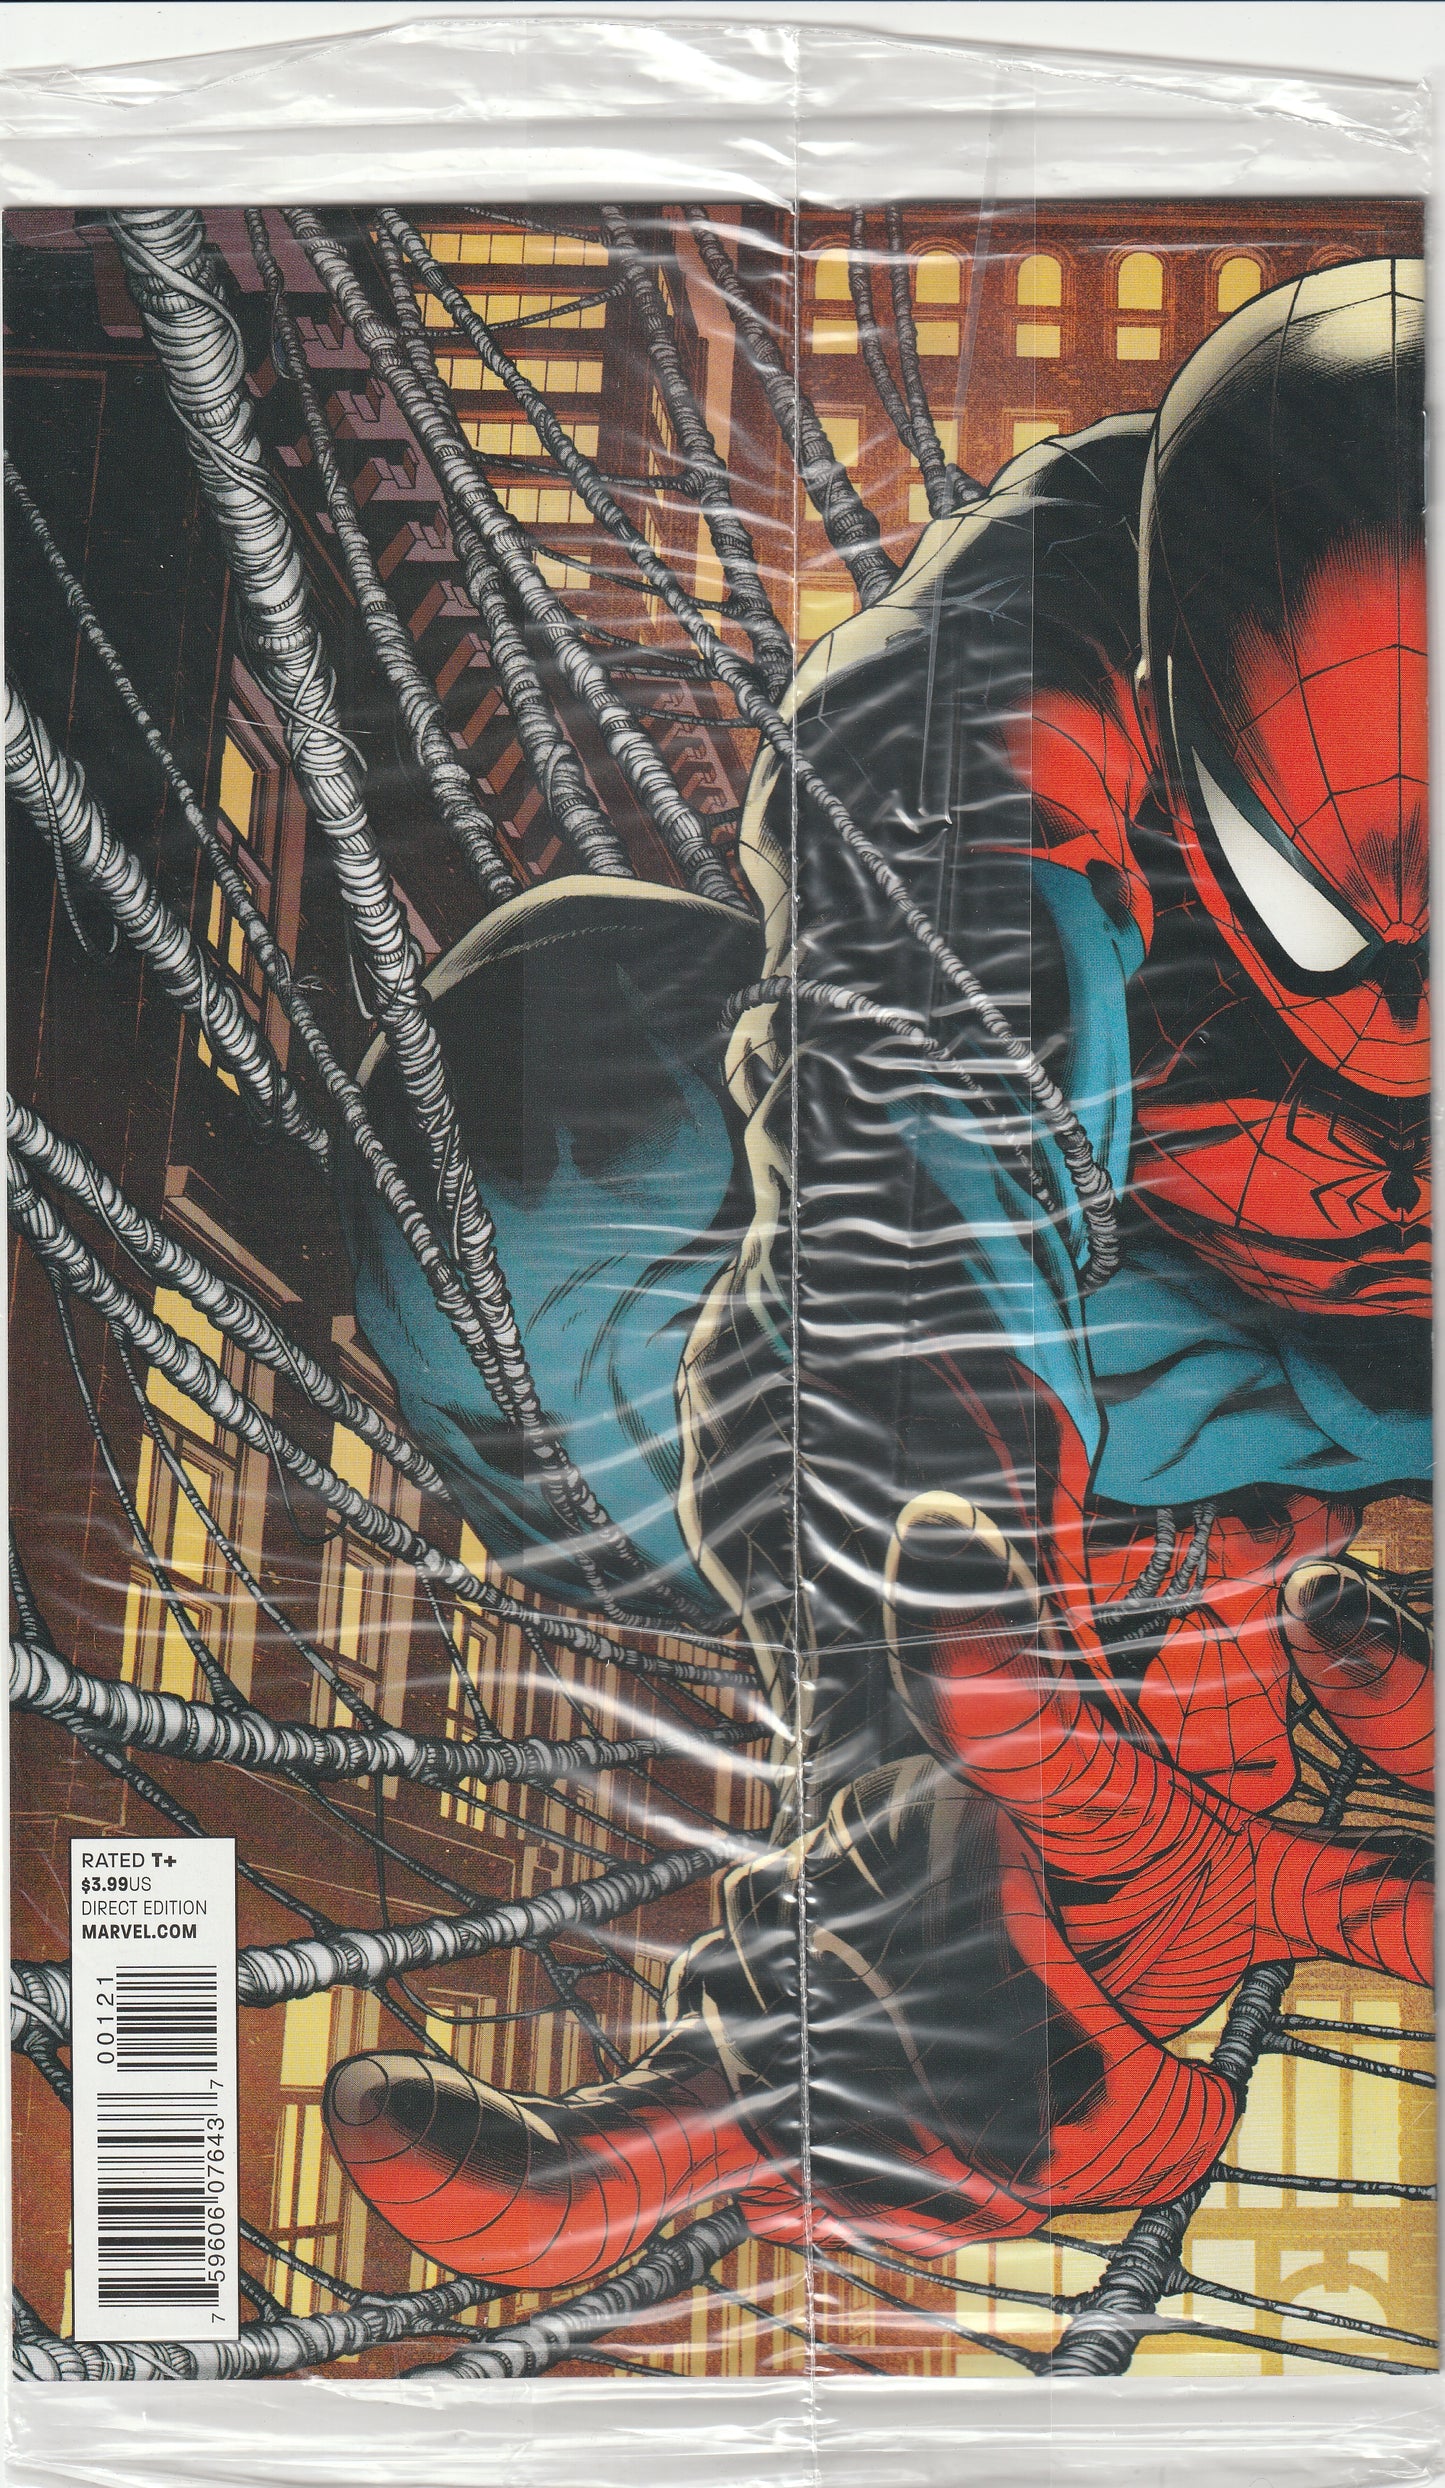 Avenging Spider-Man #1 (2012) - Polybagged Joe Quesada Variant Cover 1:50 ratio